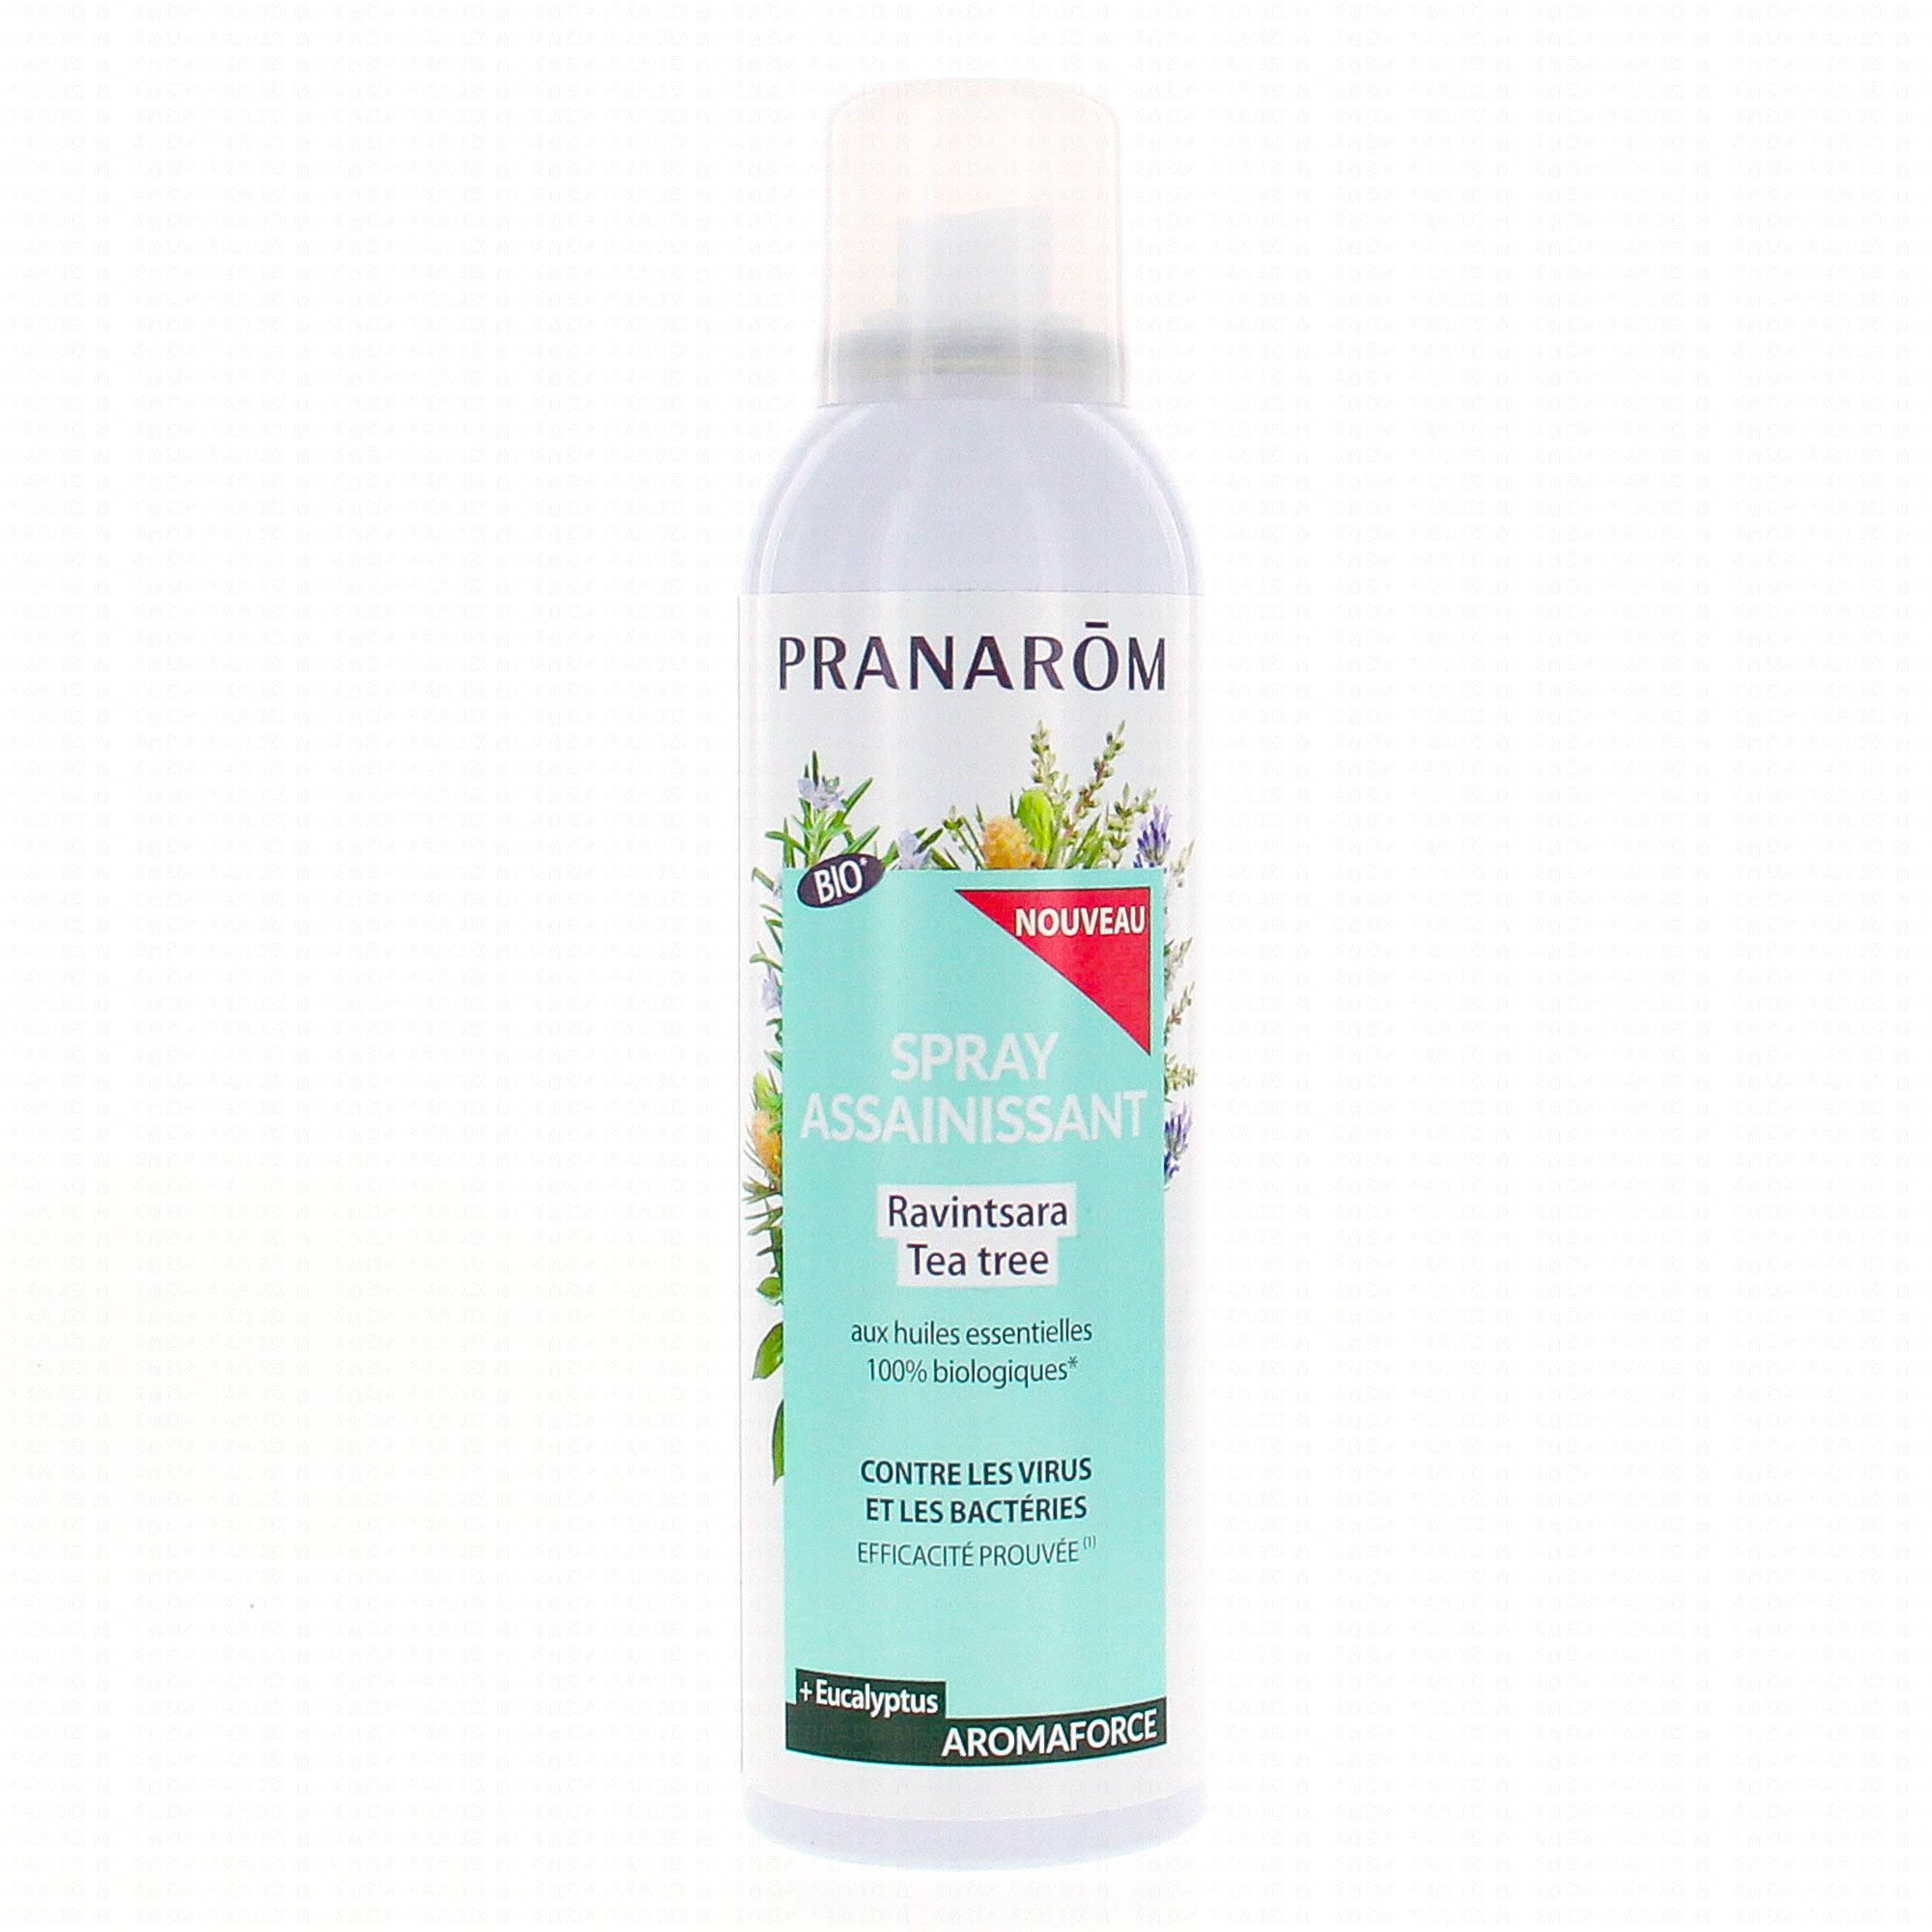 PRANAROM Aromaforce - Spray Assainissant Ravintsara Tea Tree Bio